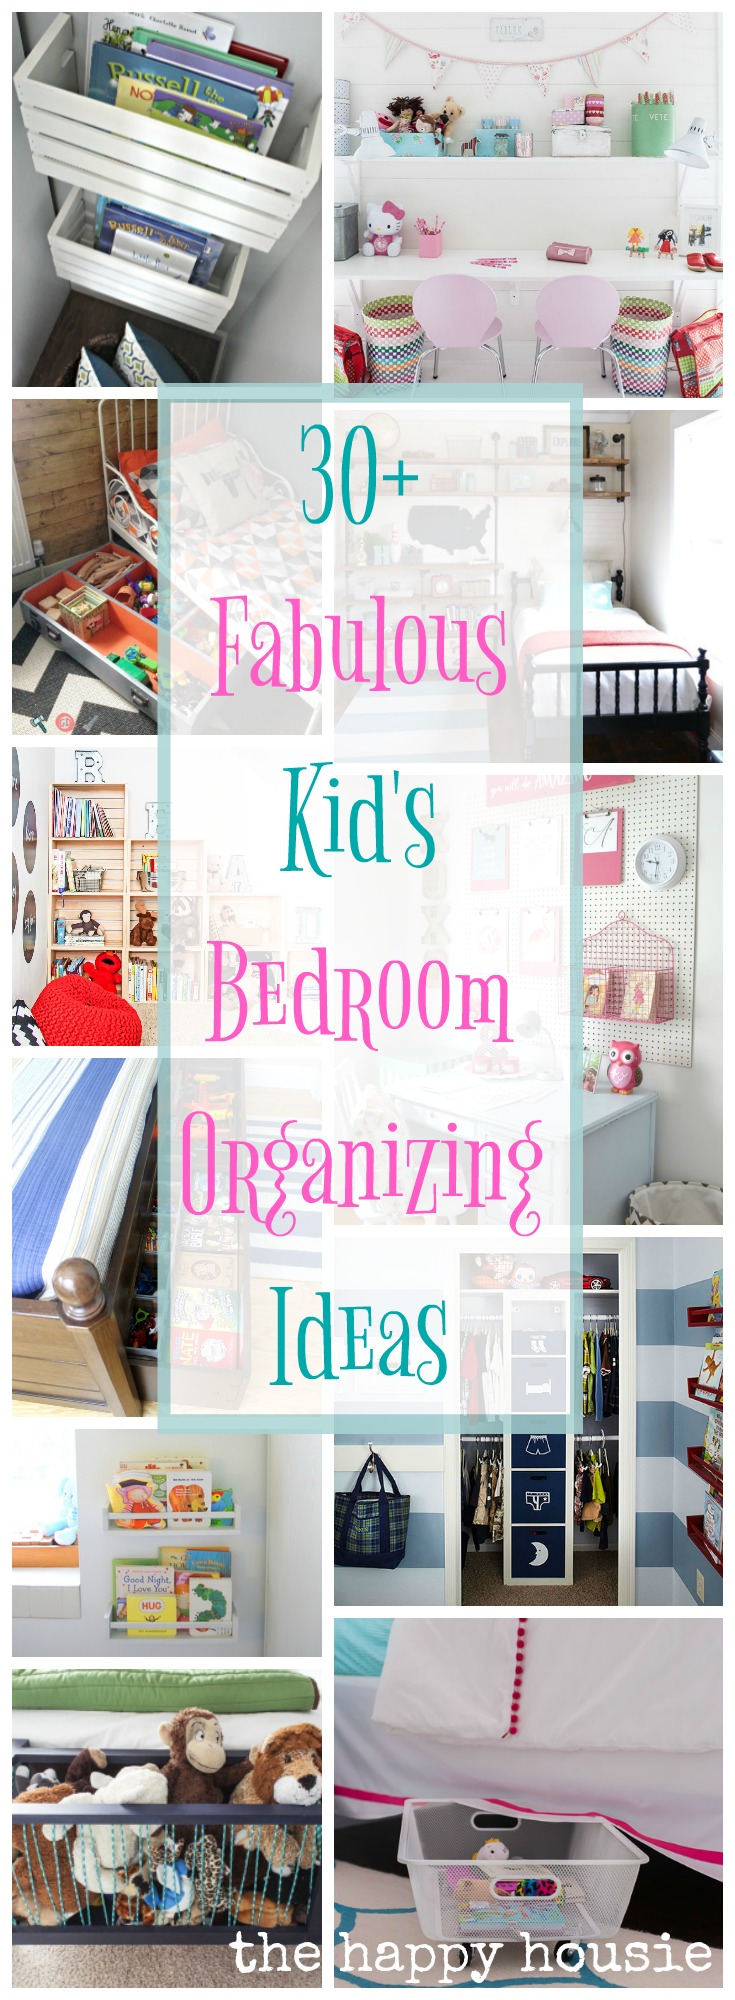 30+ fabulous kid's bedroom organizing ideas graphic.